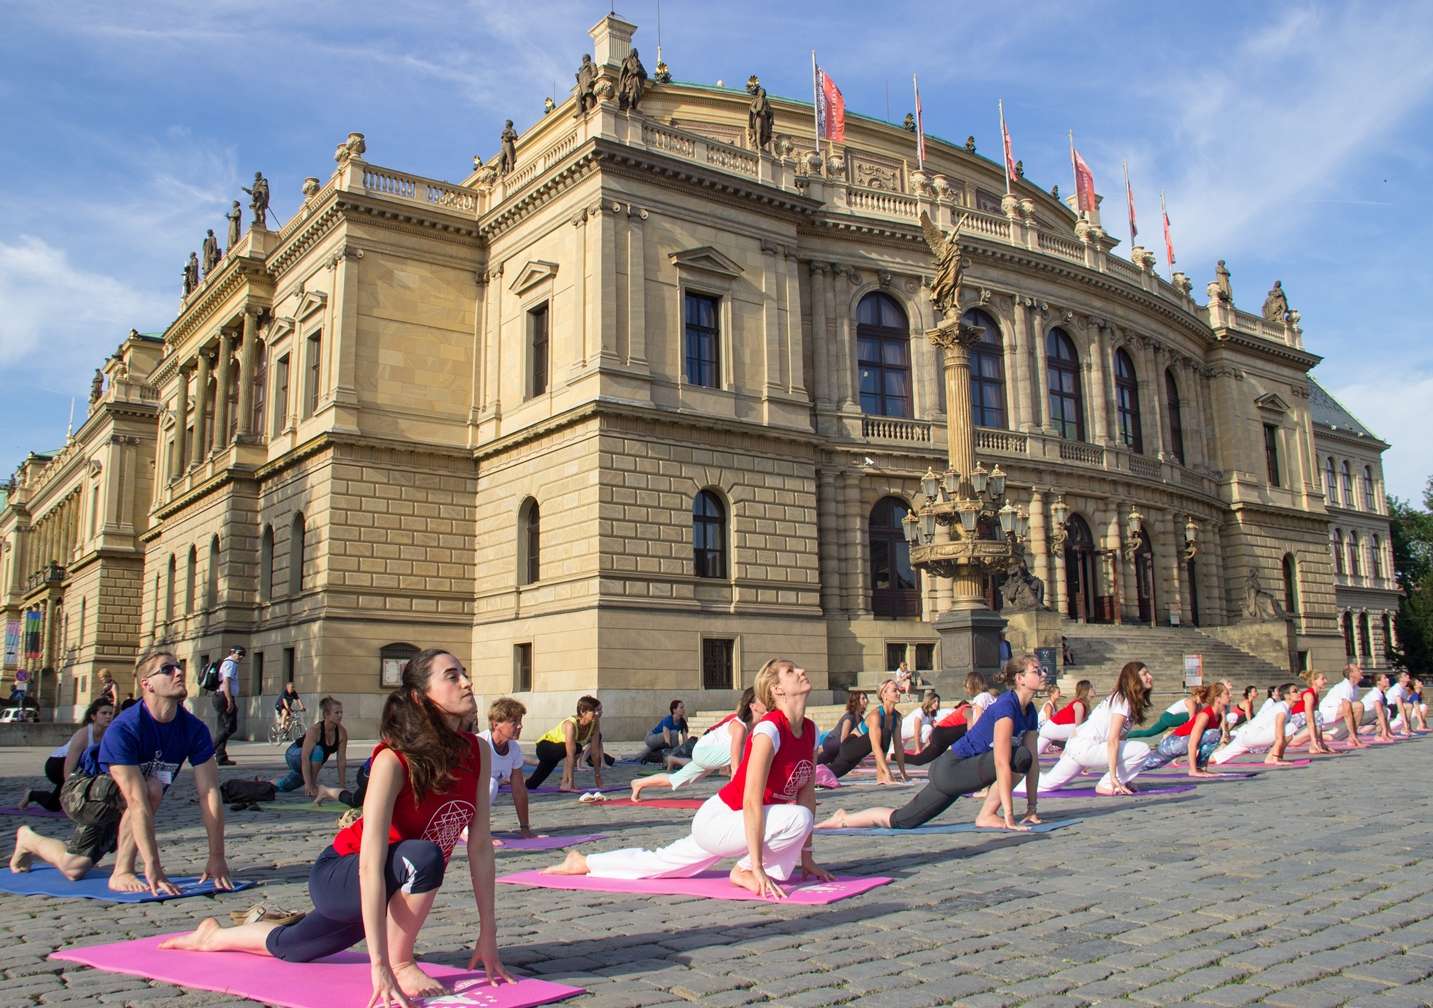 The Grand Yoga Performance in Prague 2018